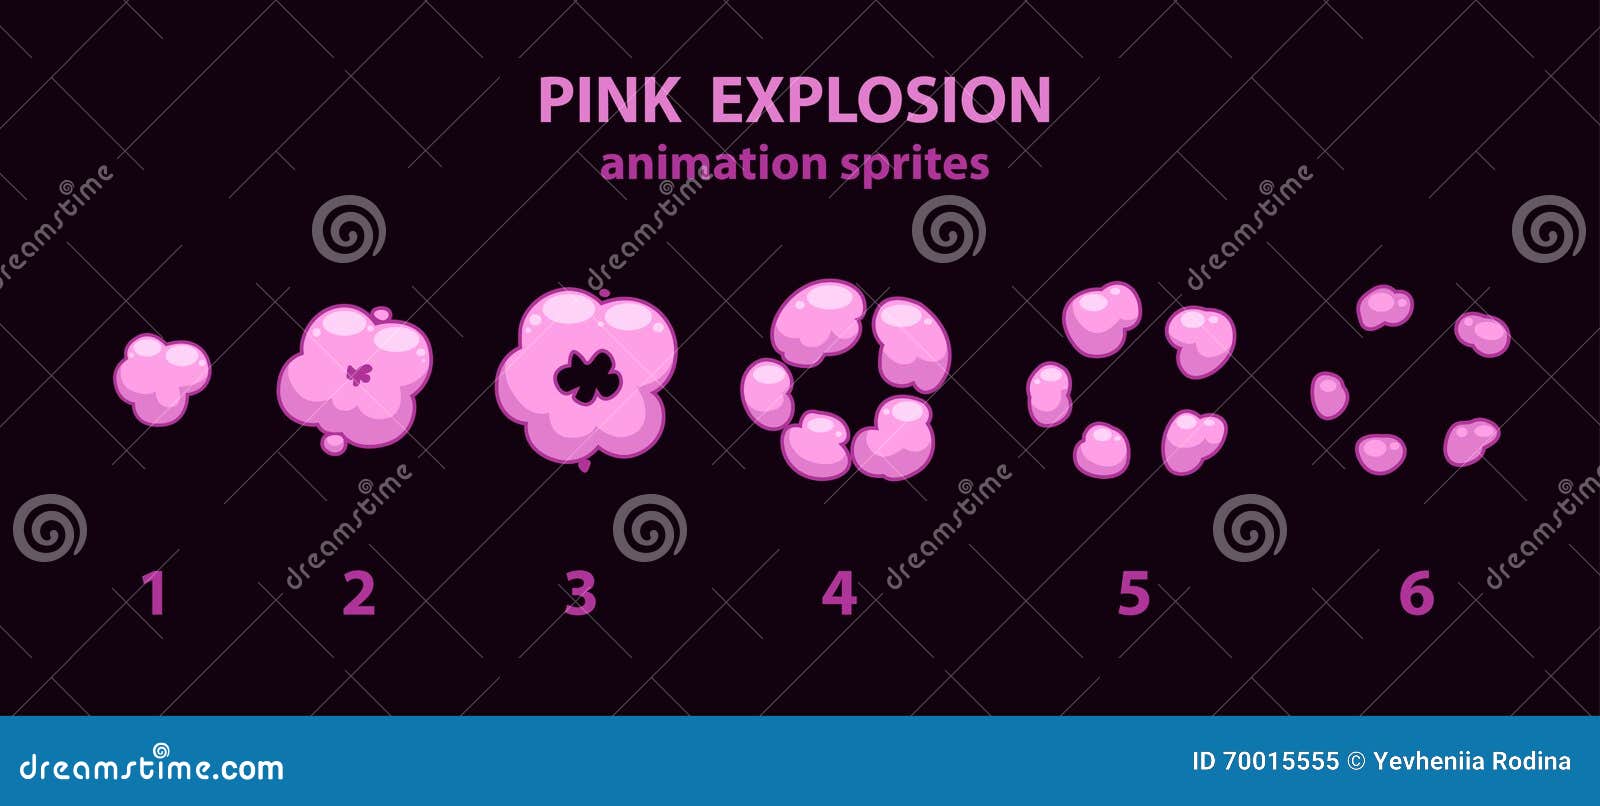 explode effect animation sprites